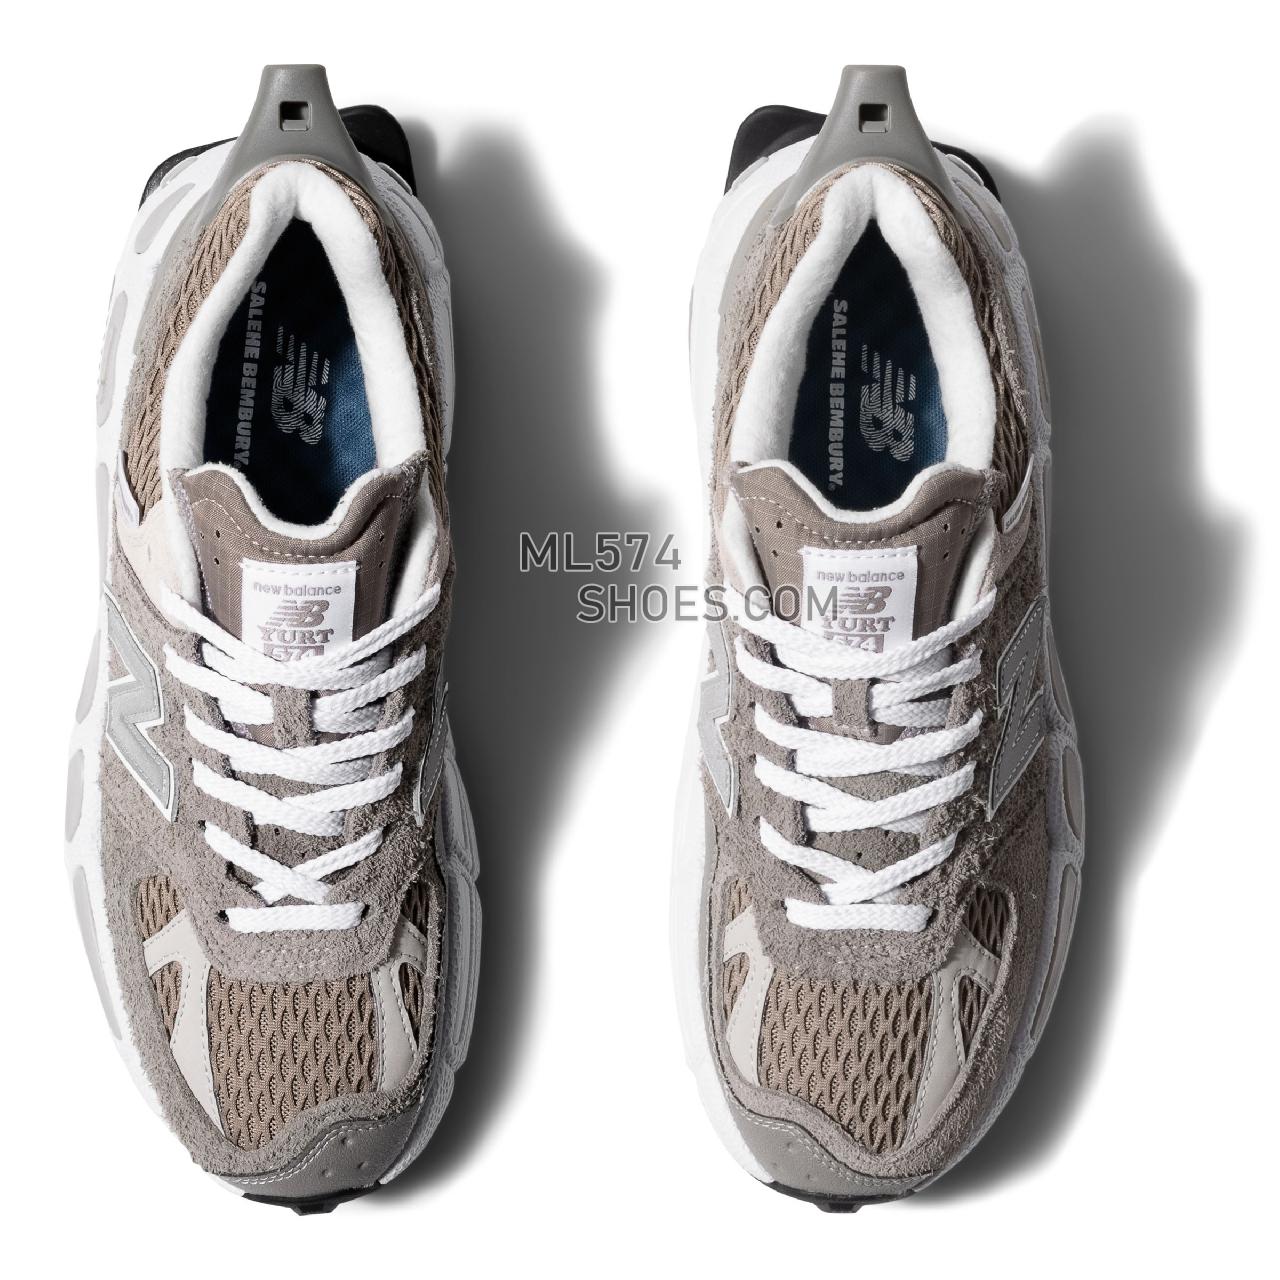 New Balance Salehe Bembury 574 YURT - Unisex Men's Women's Sport Style Sneakers - Shark Skin with Nb White - MS574YSC